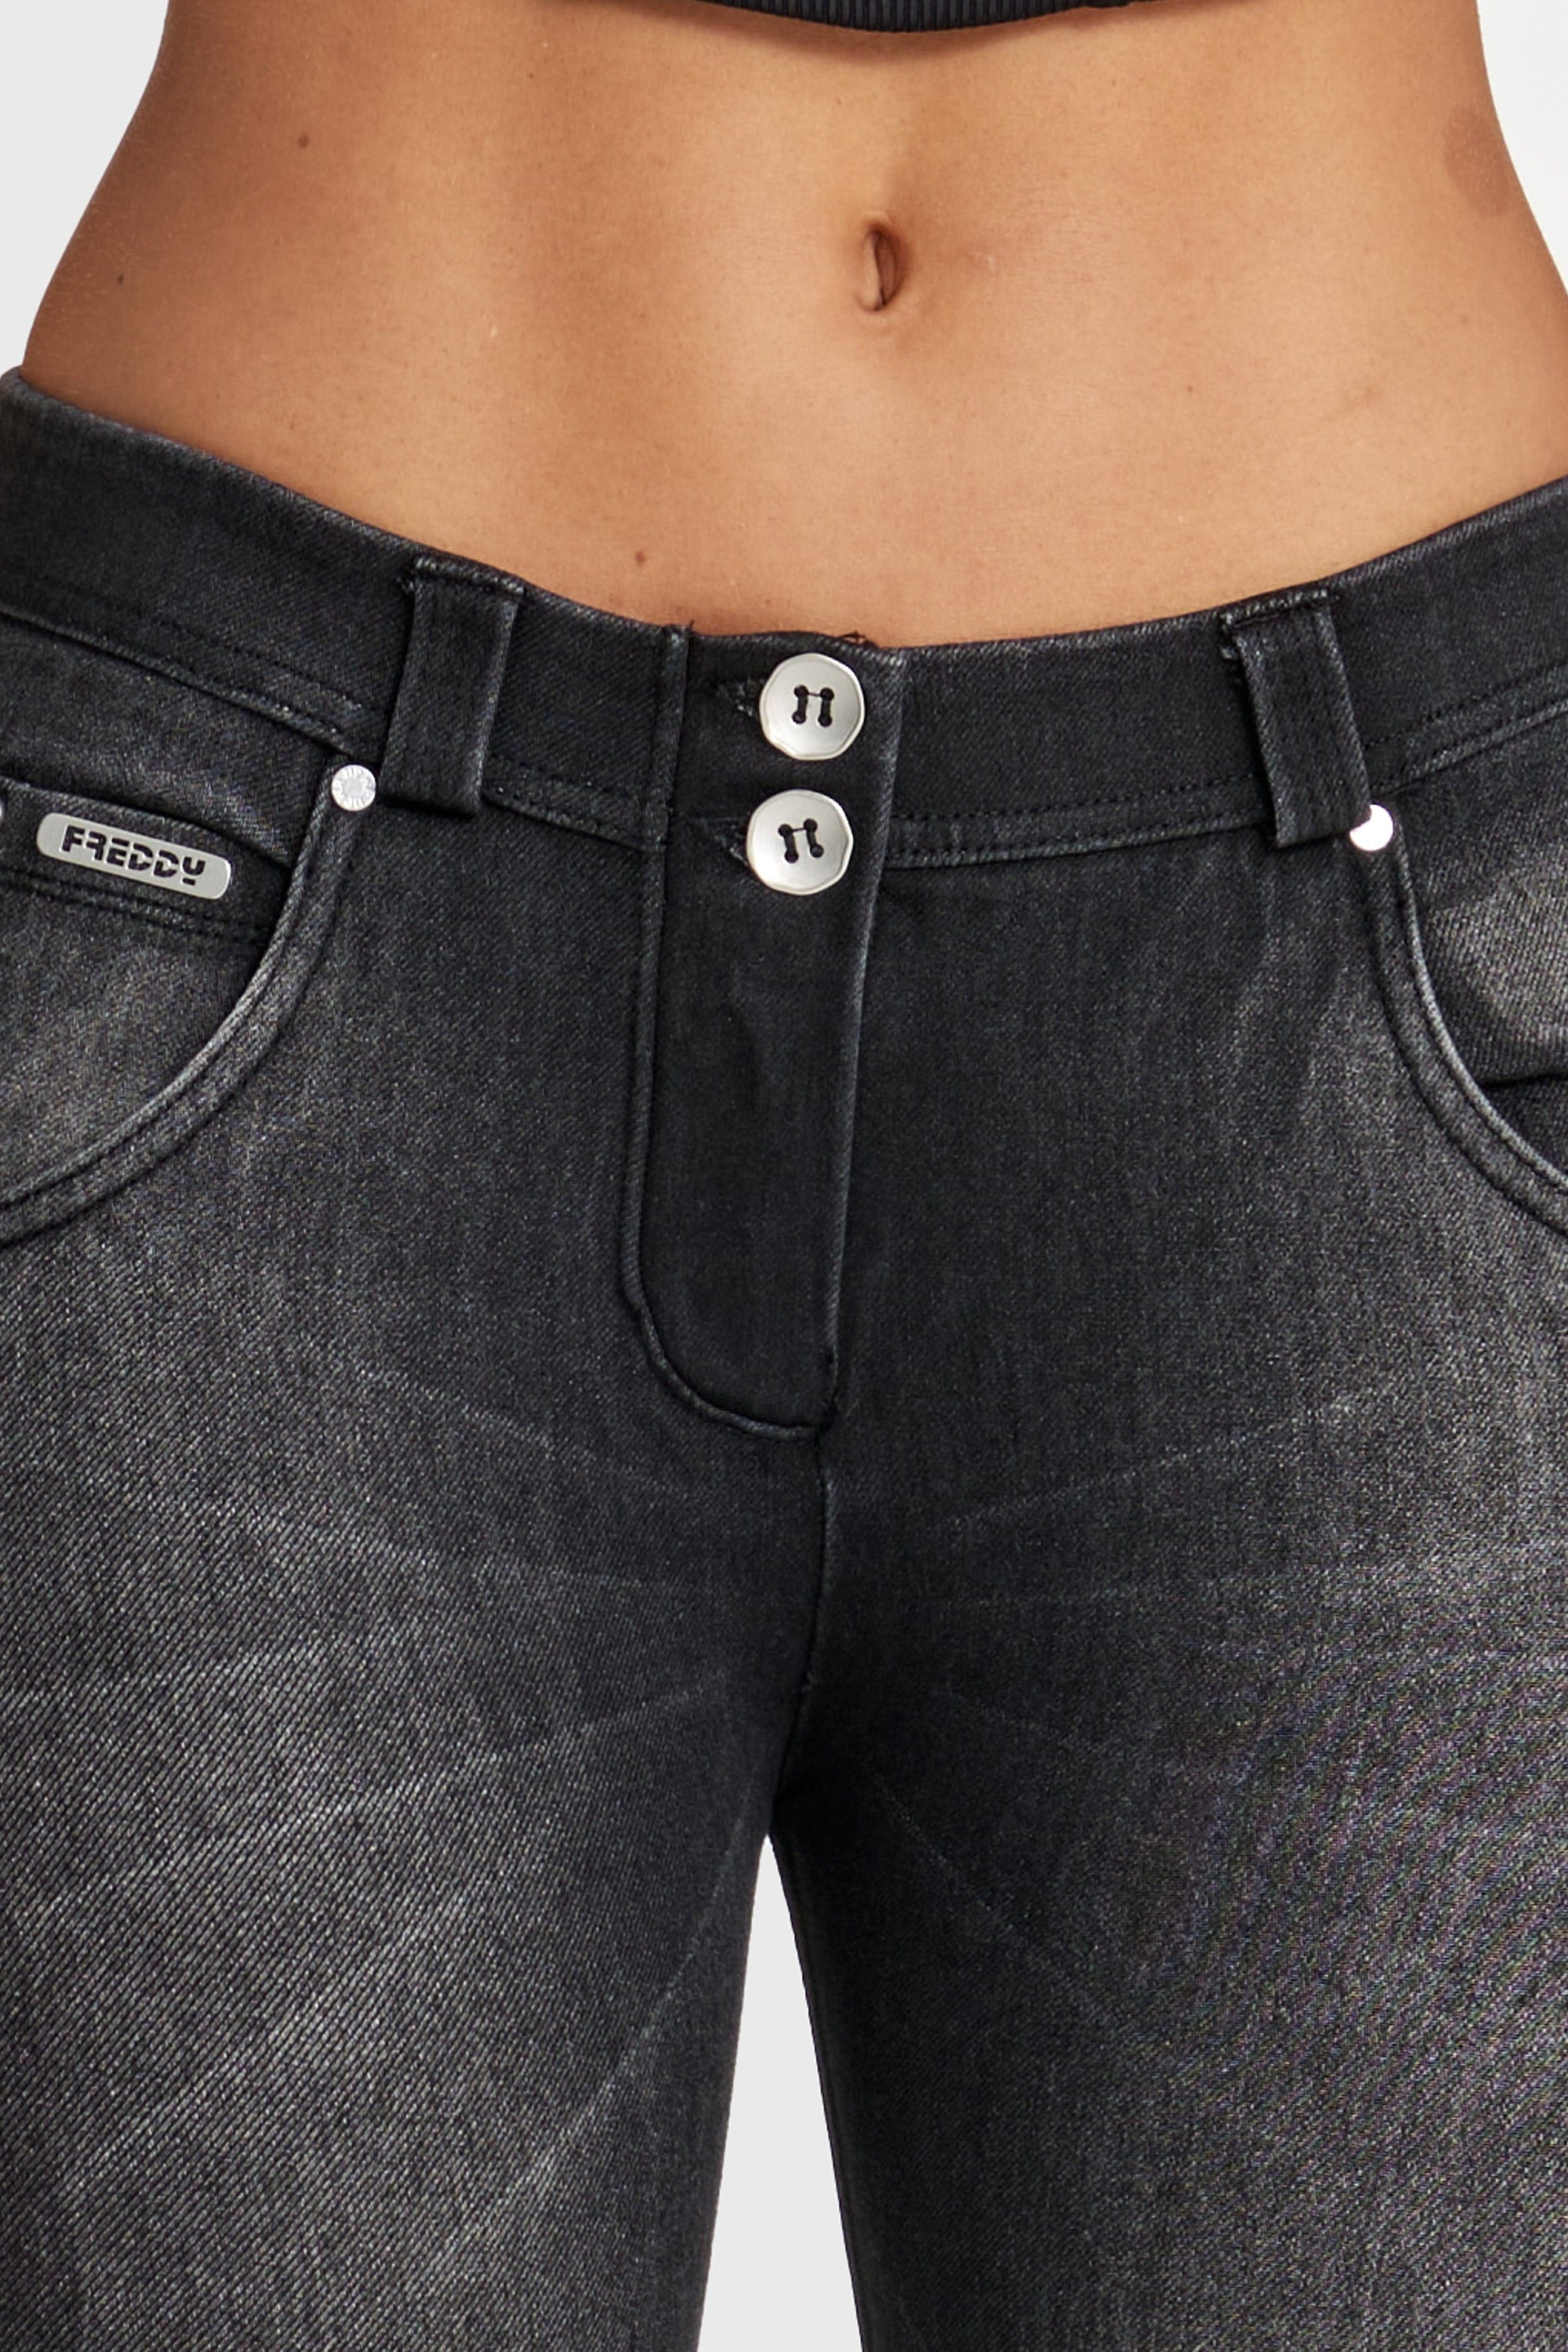 WR.UP® Snug Jeans - Mid Rise - Full Length - Black + Black Stitching 11